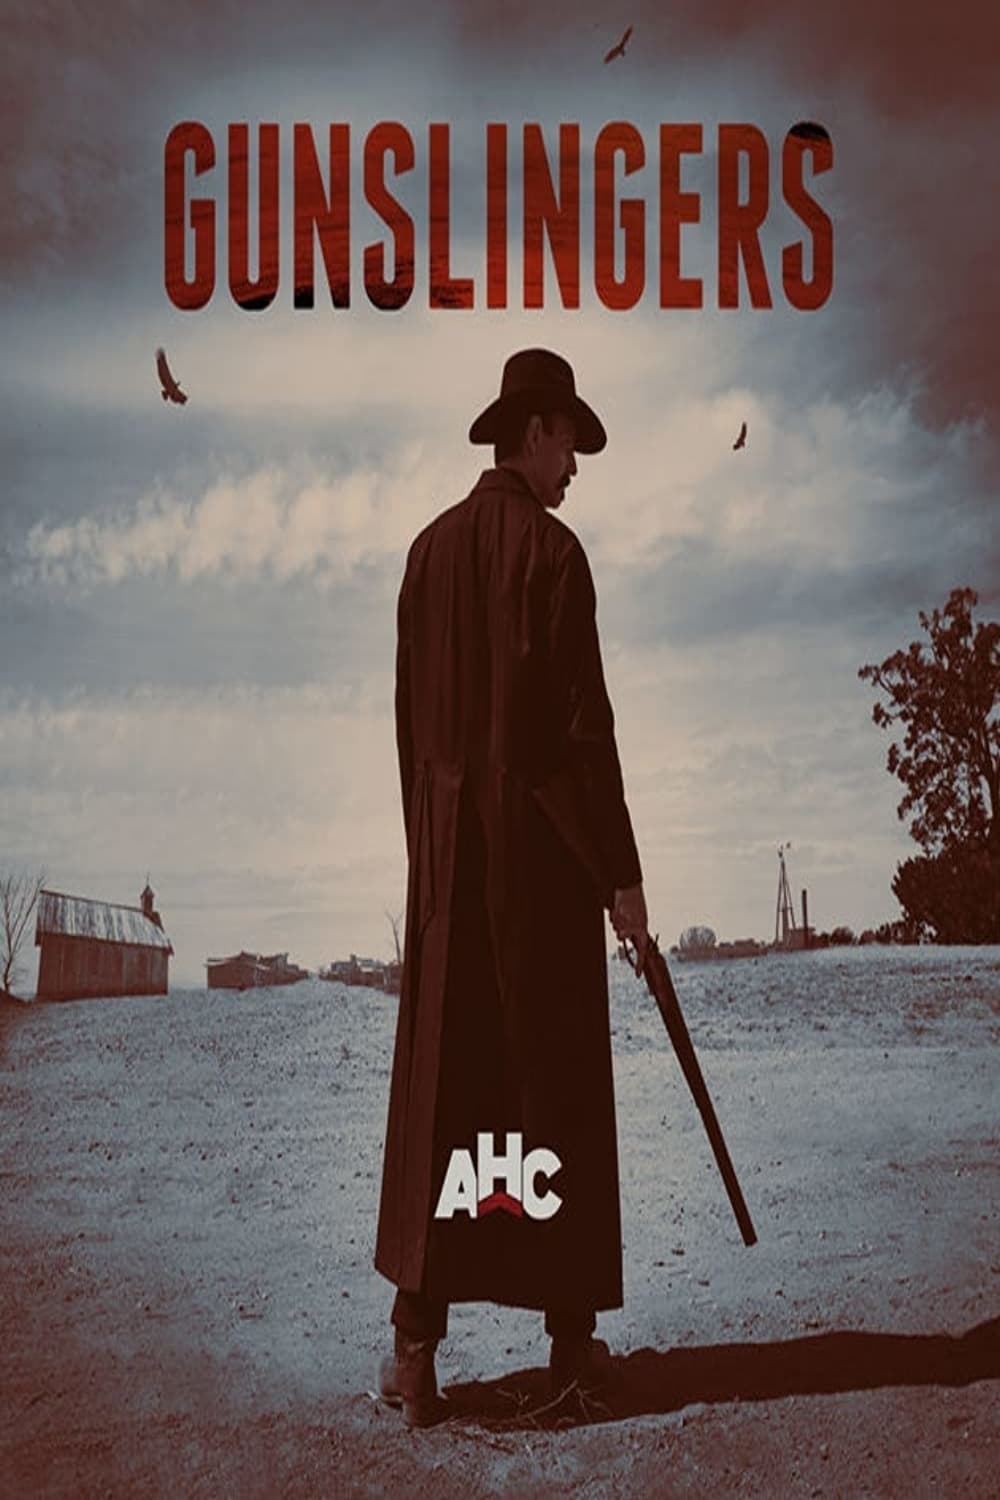 Gunslingers TV Shows About Wild West